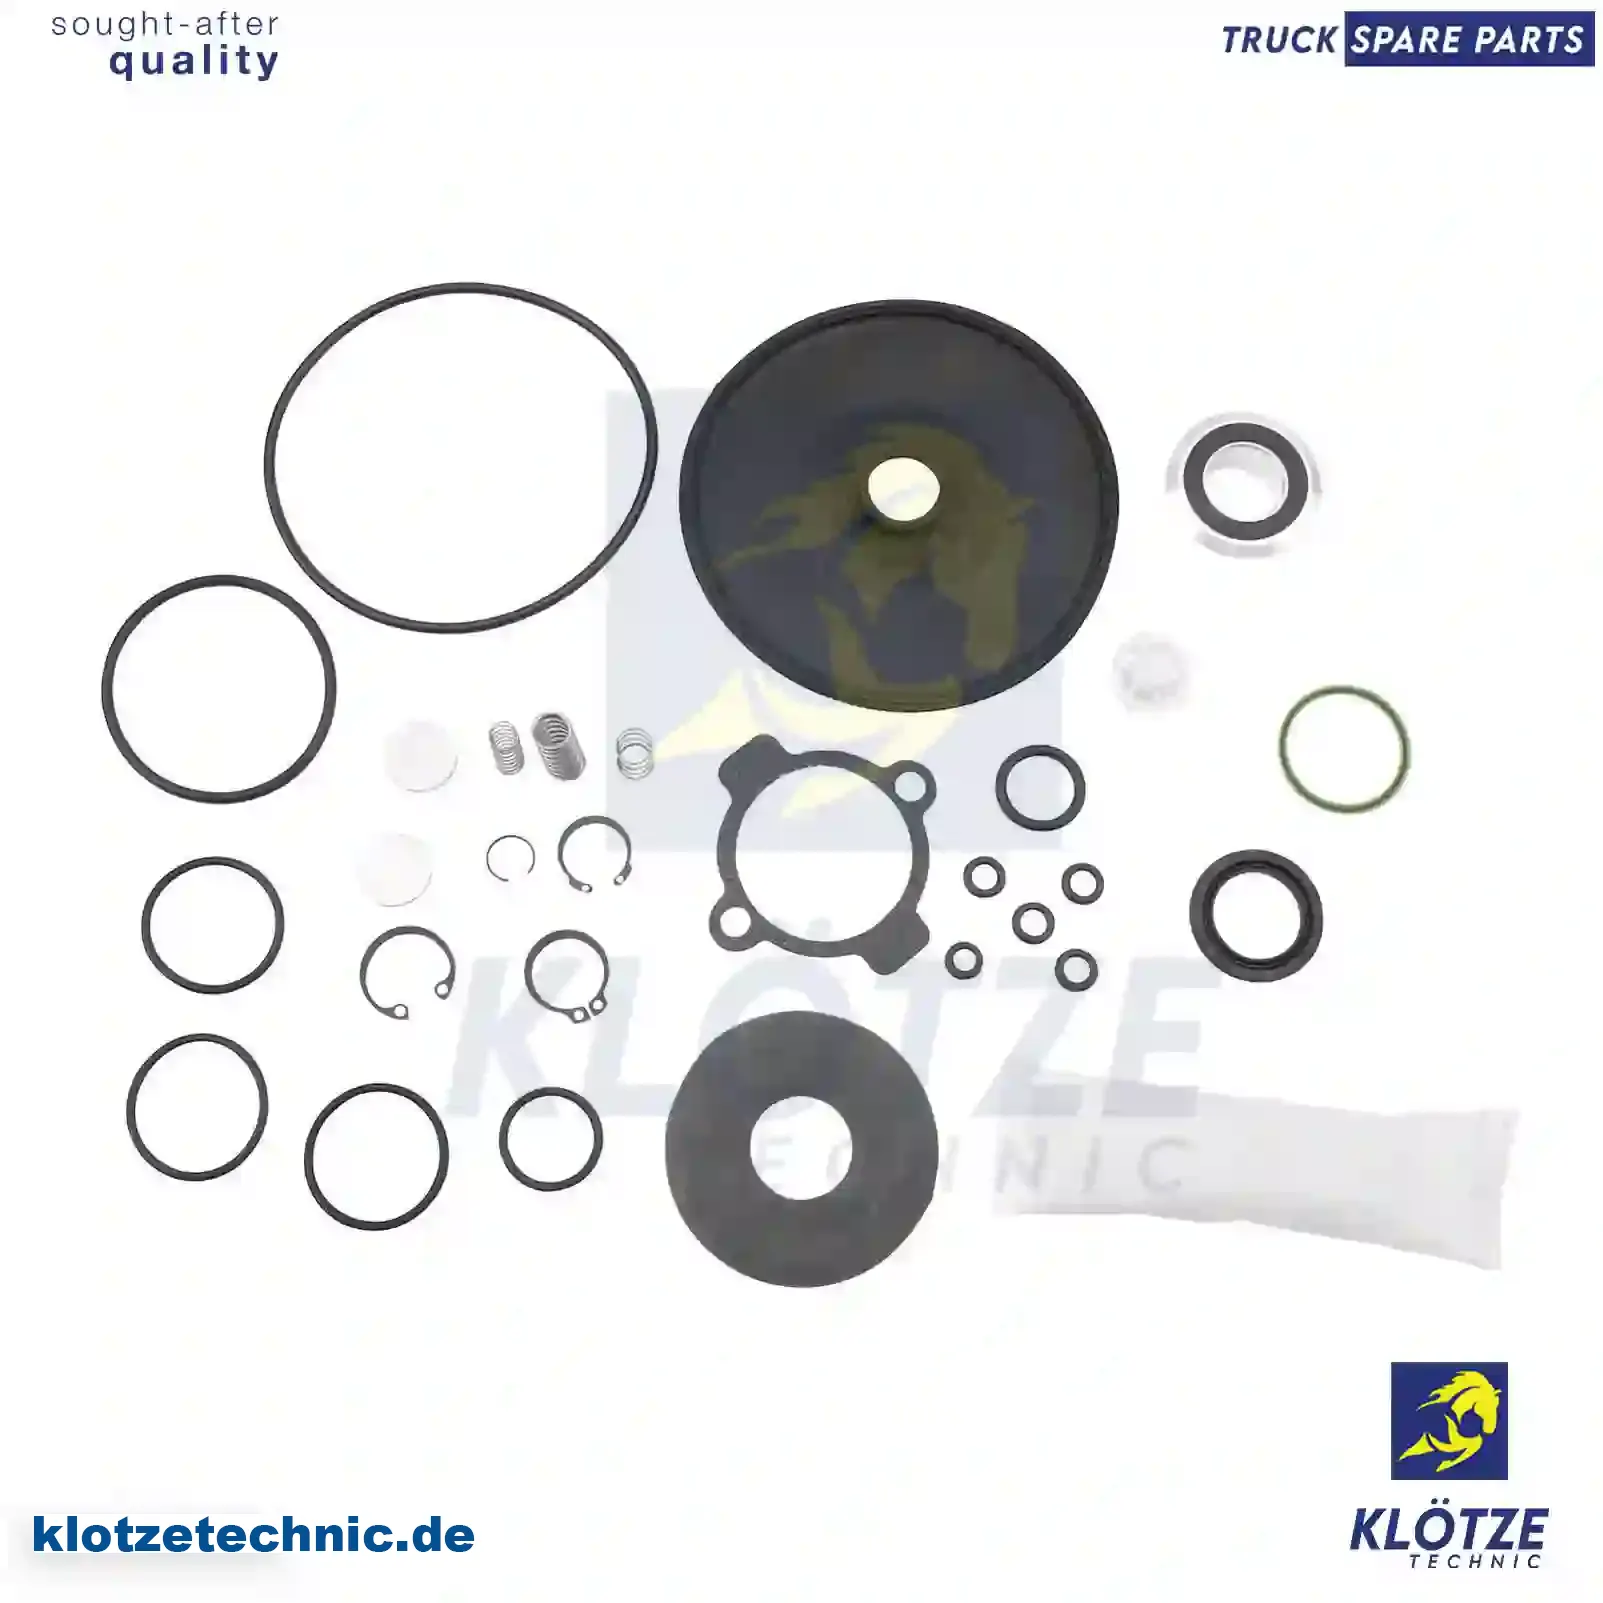 Repair kit, load sensitive valve, 1506219, 5021170225, 1935073, 3090946, ZG50686-0008 || Klötze Technic